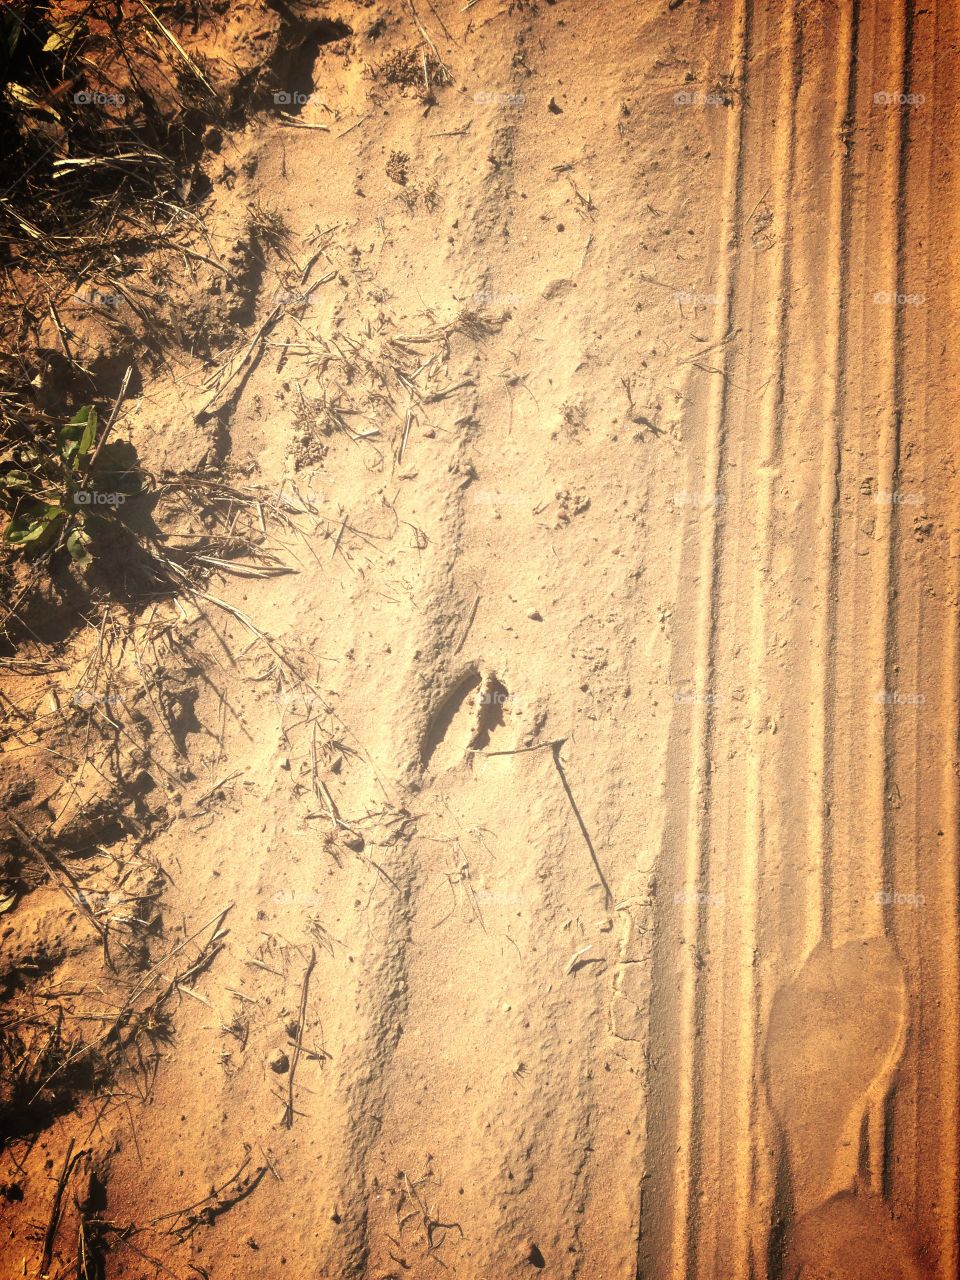 Animal footprint. Footprint in the sand